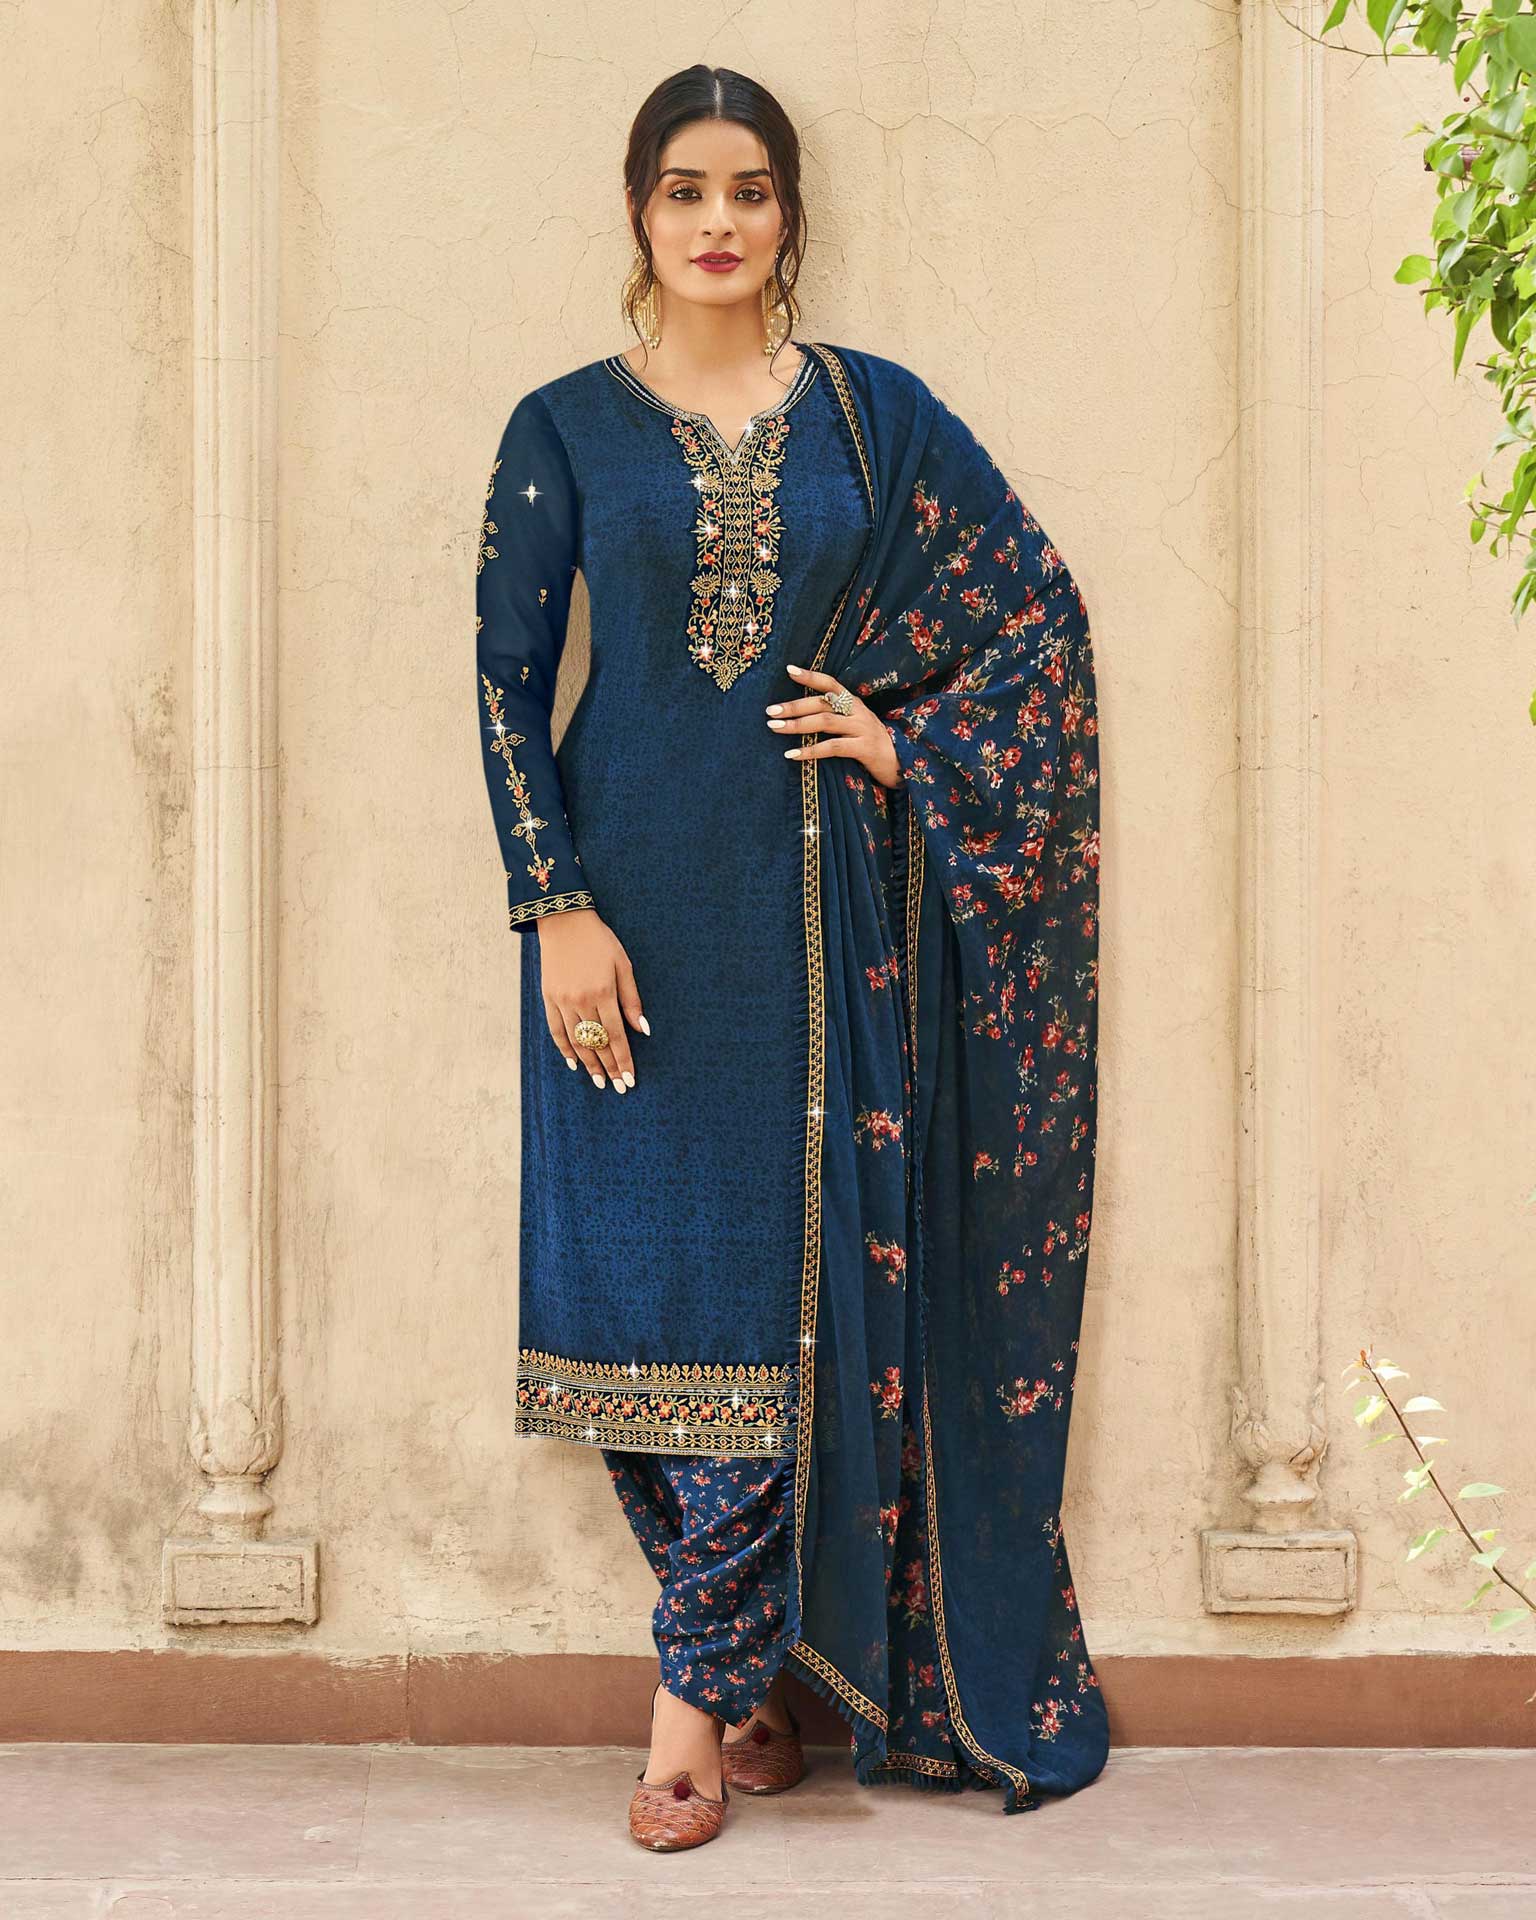 Wama Fashion Jacquard Floral Print Salwar Suit Material Price in India -  Buy Wama Fashion Jacquard Floral Print Salwar Suit Material online at  Flipkart.com